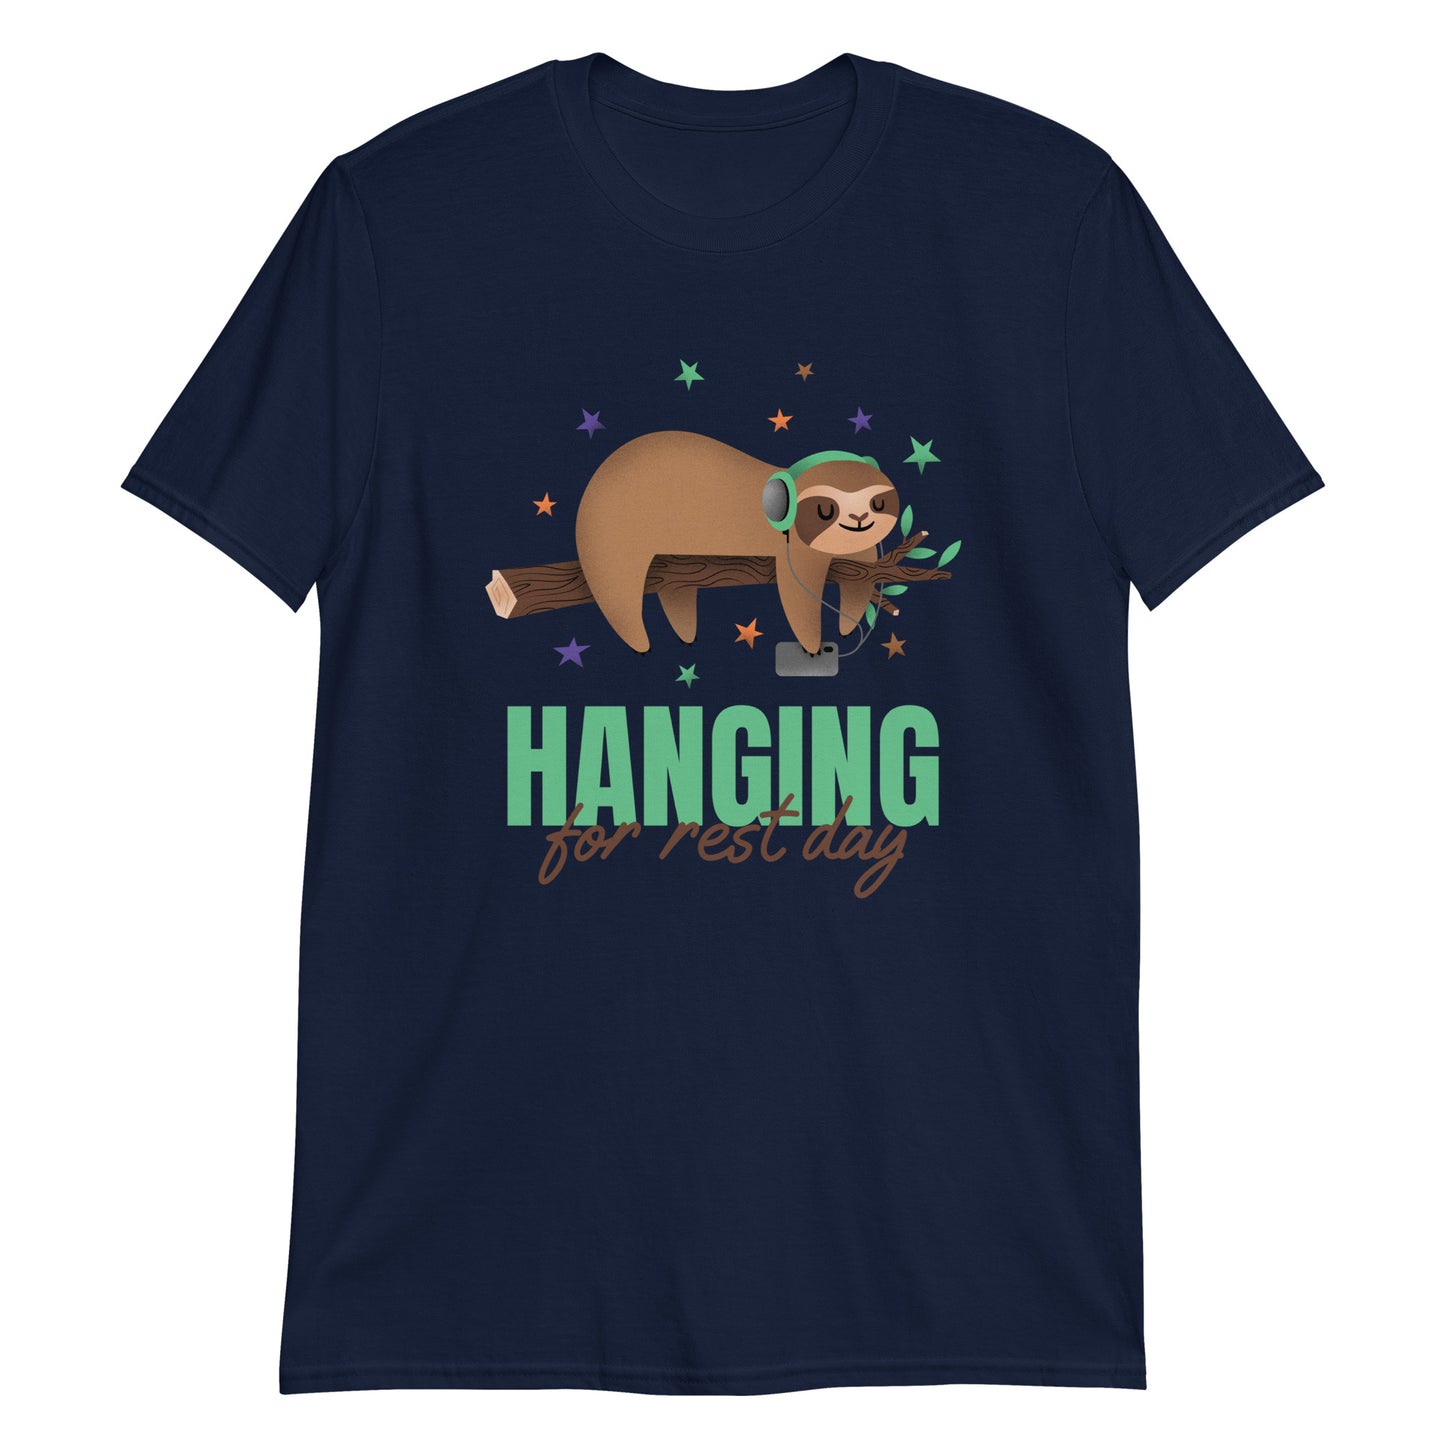 Hanging For Rest Day - Short-Sleeve Unisex T-Shirt Navy Unisex T-shirt Animal